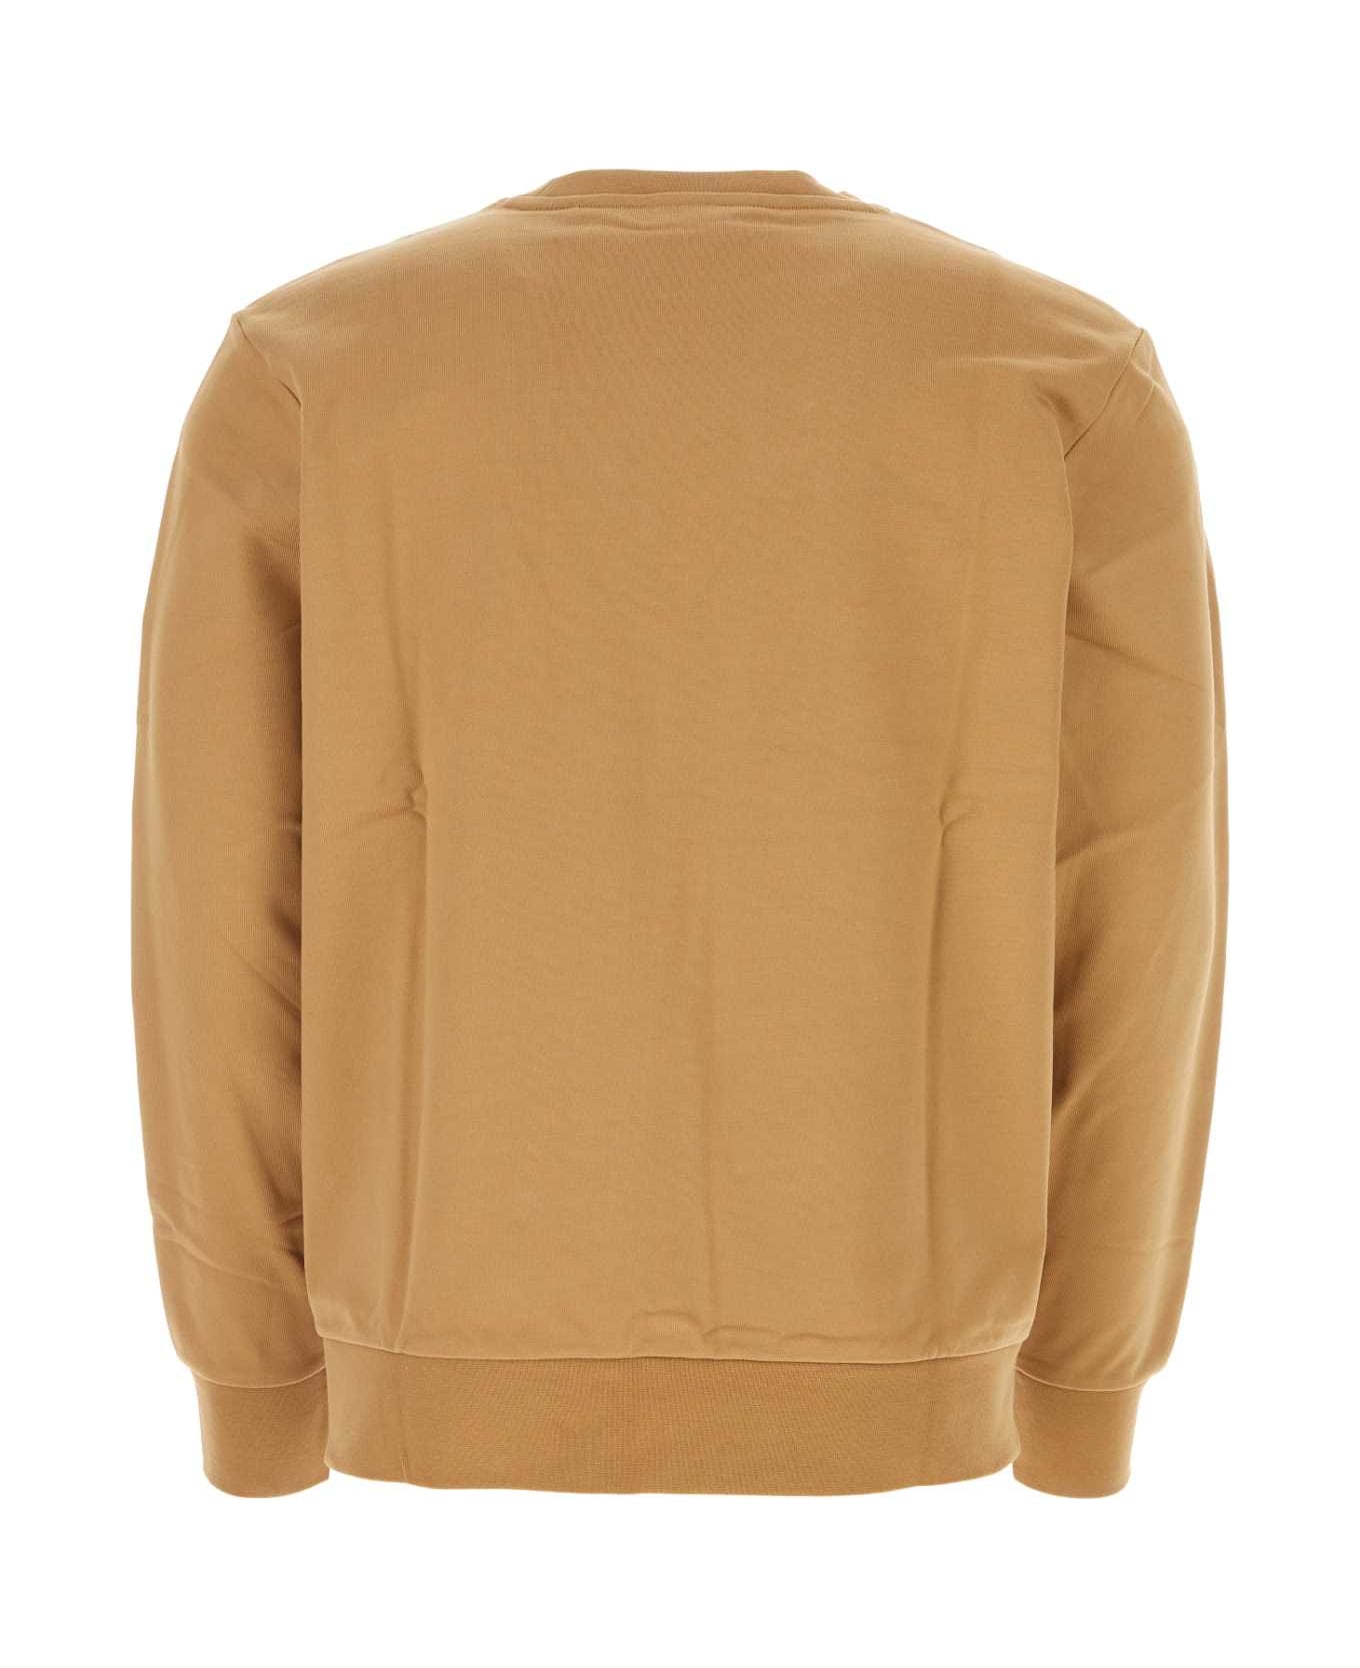 Hugo Boss Camel Cotton Sweatshirt - MEDIUMBEIGE